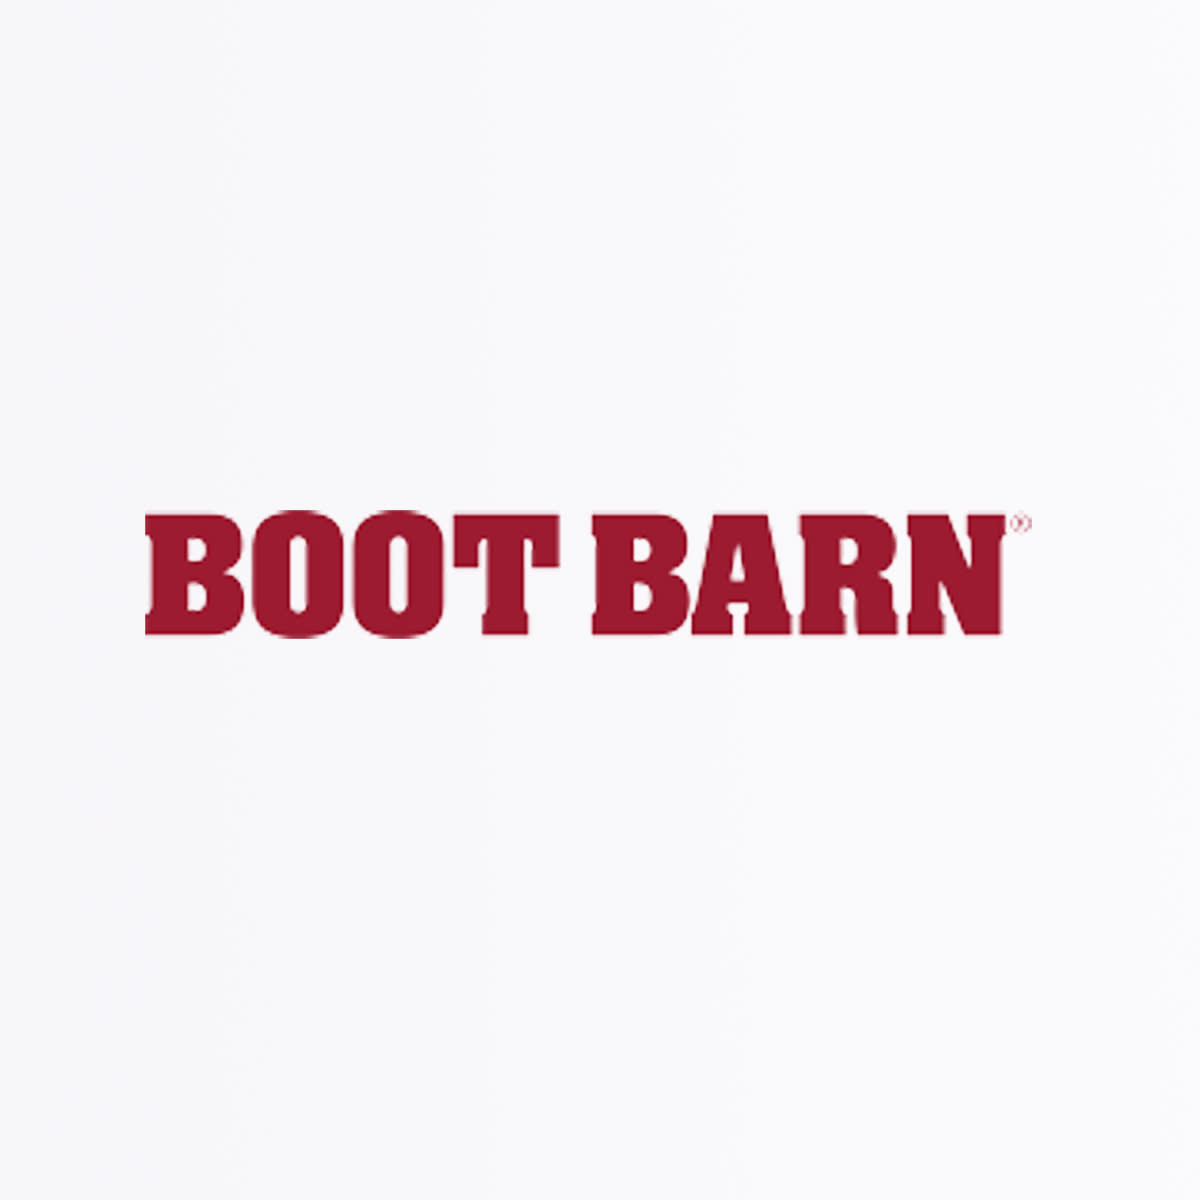 Boot barn lake charles